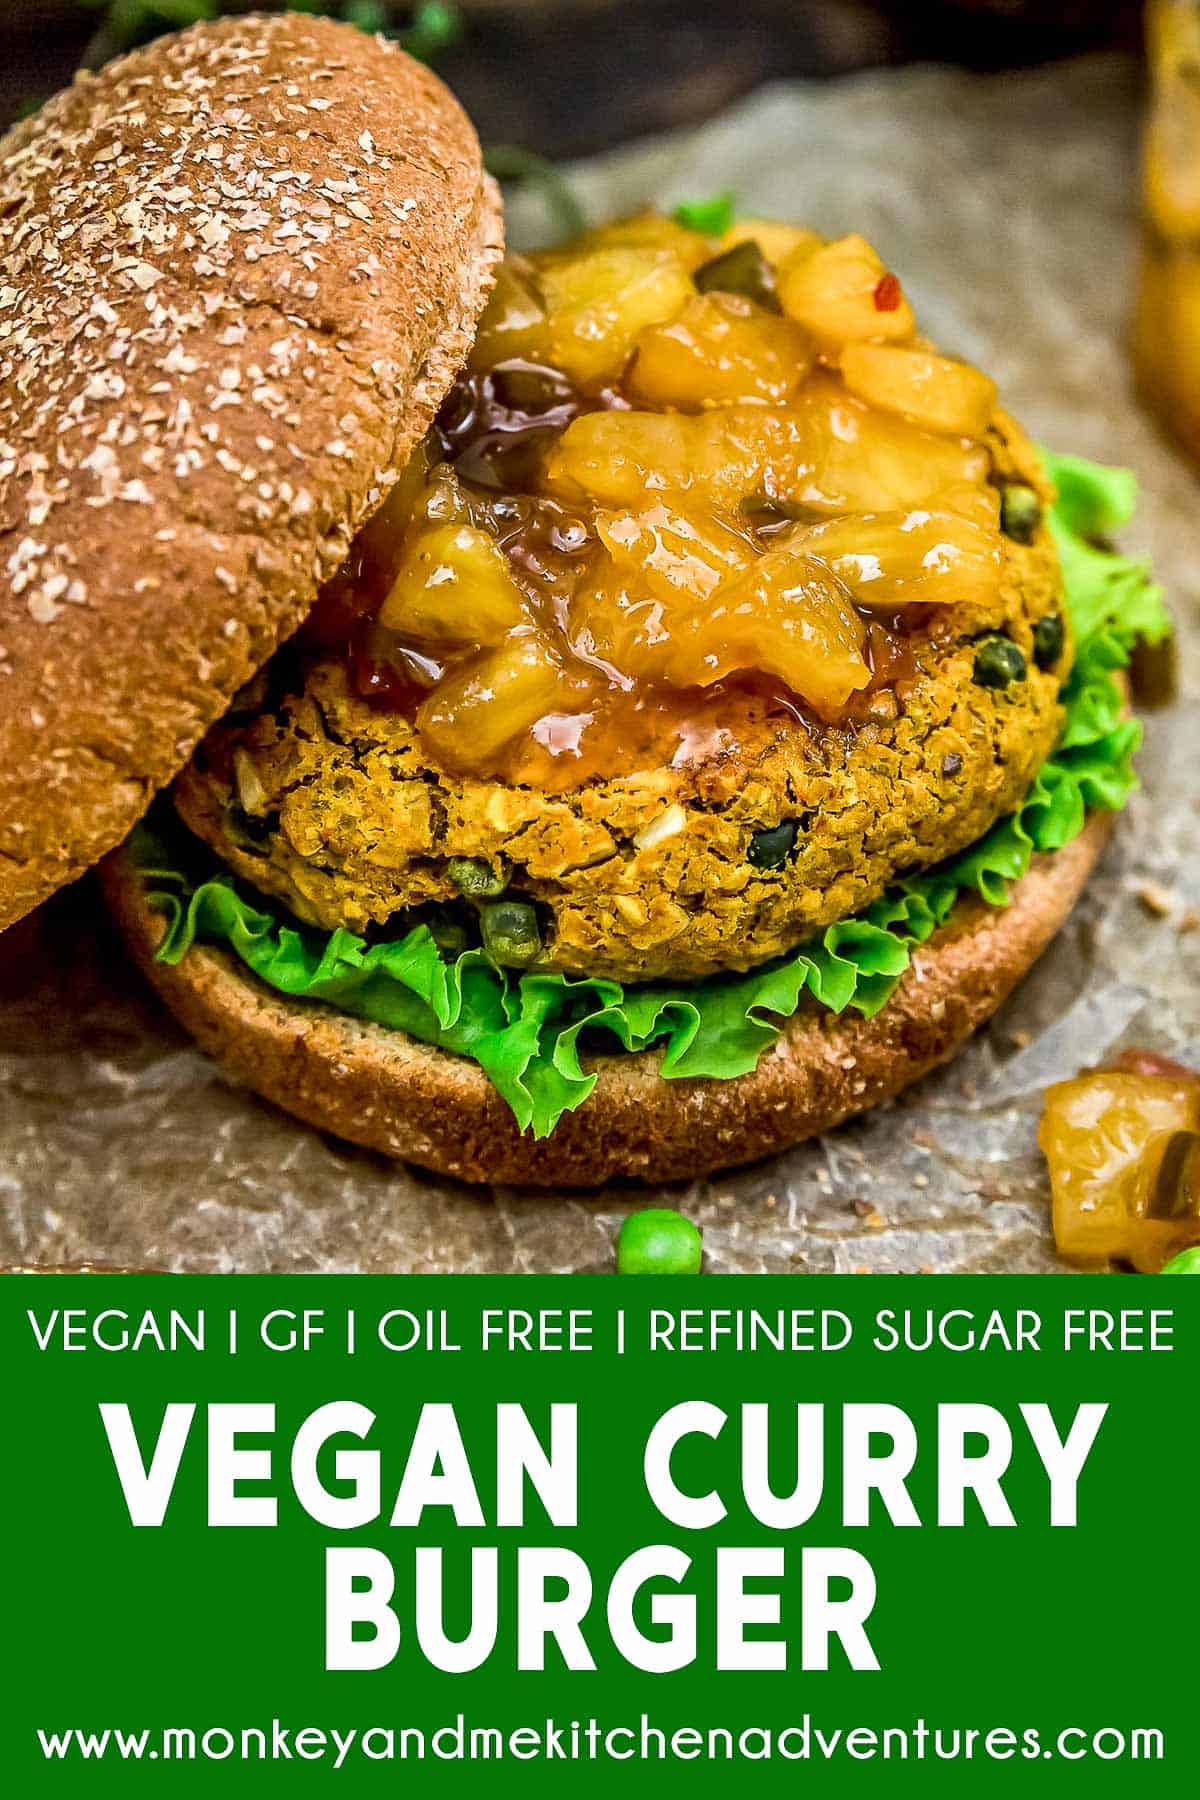 Vegan Curry Burger with text description